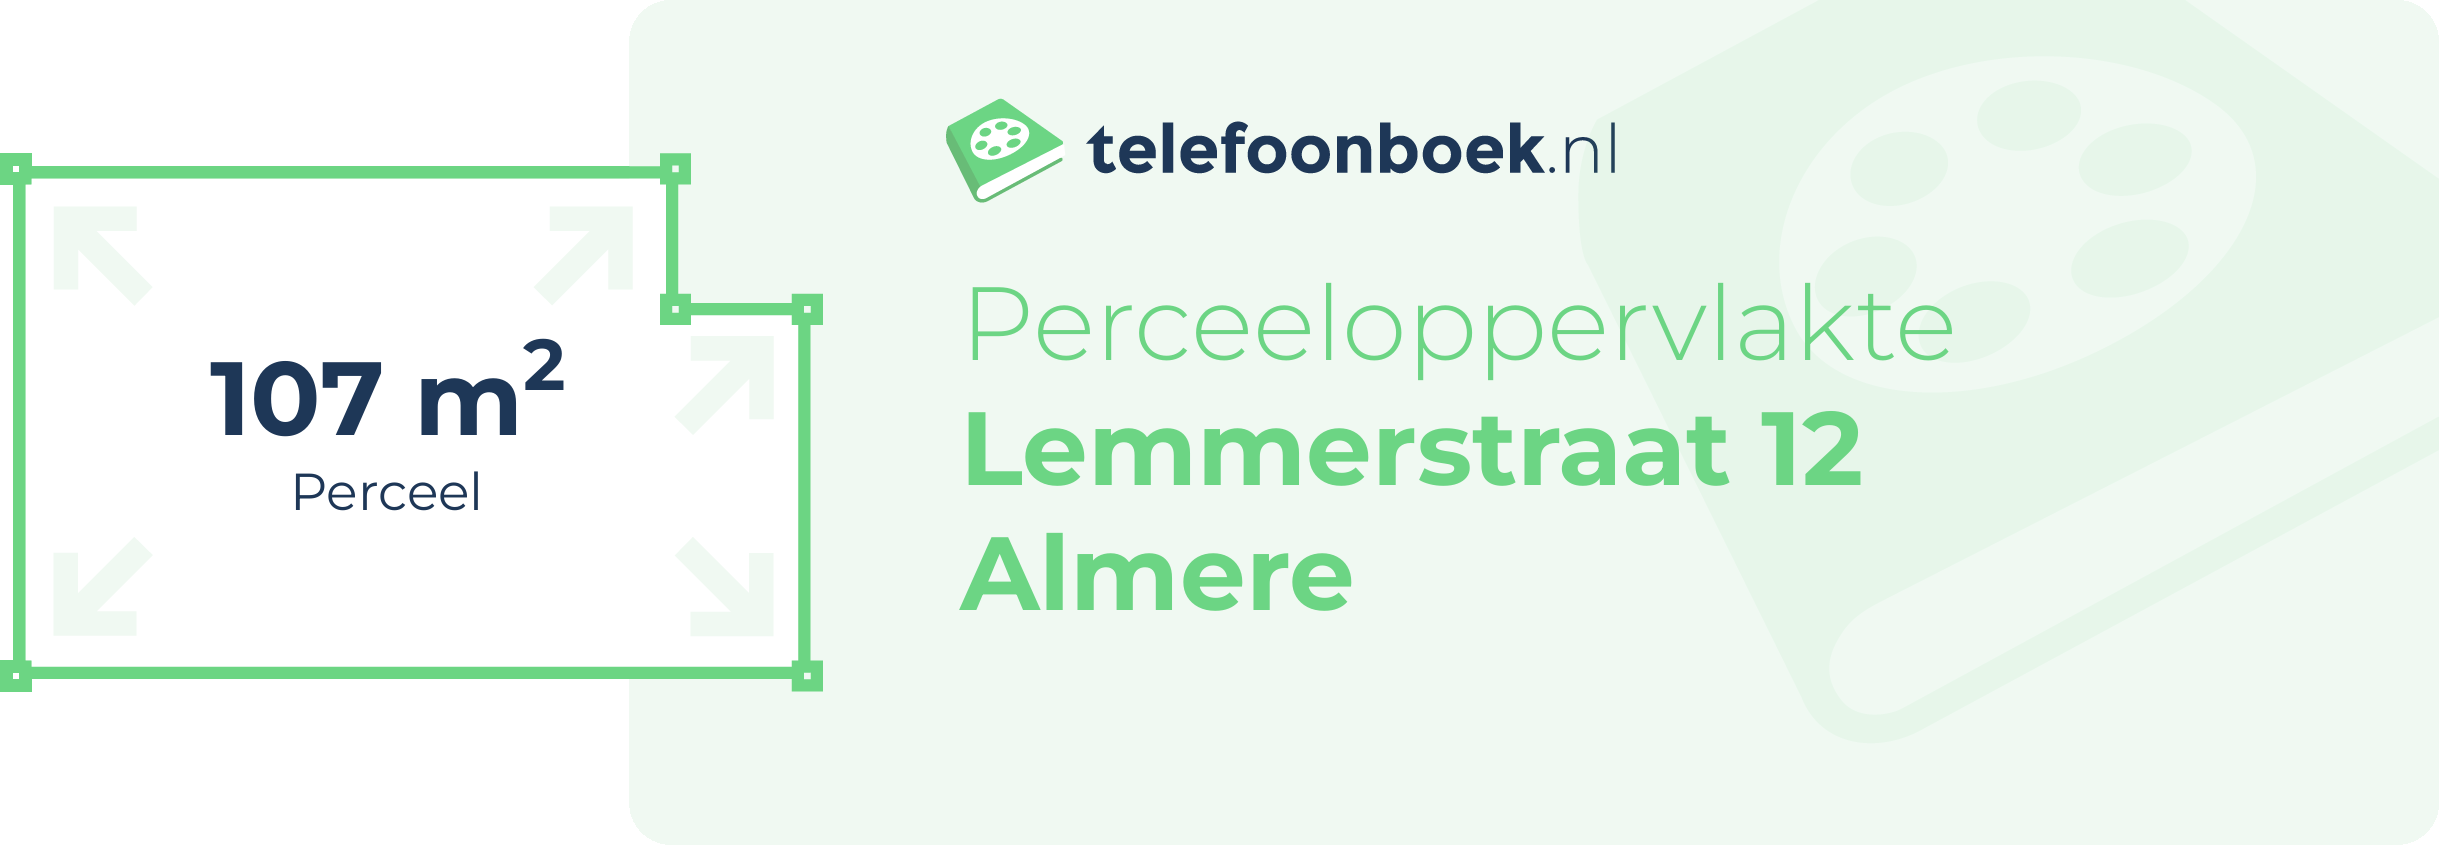 Perceeloppervlakte Lemmerstraat 12 Almere